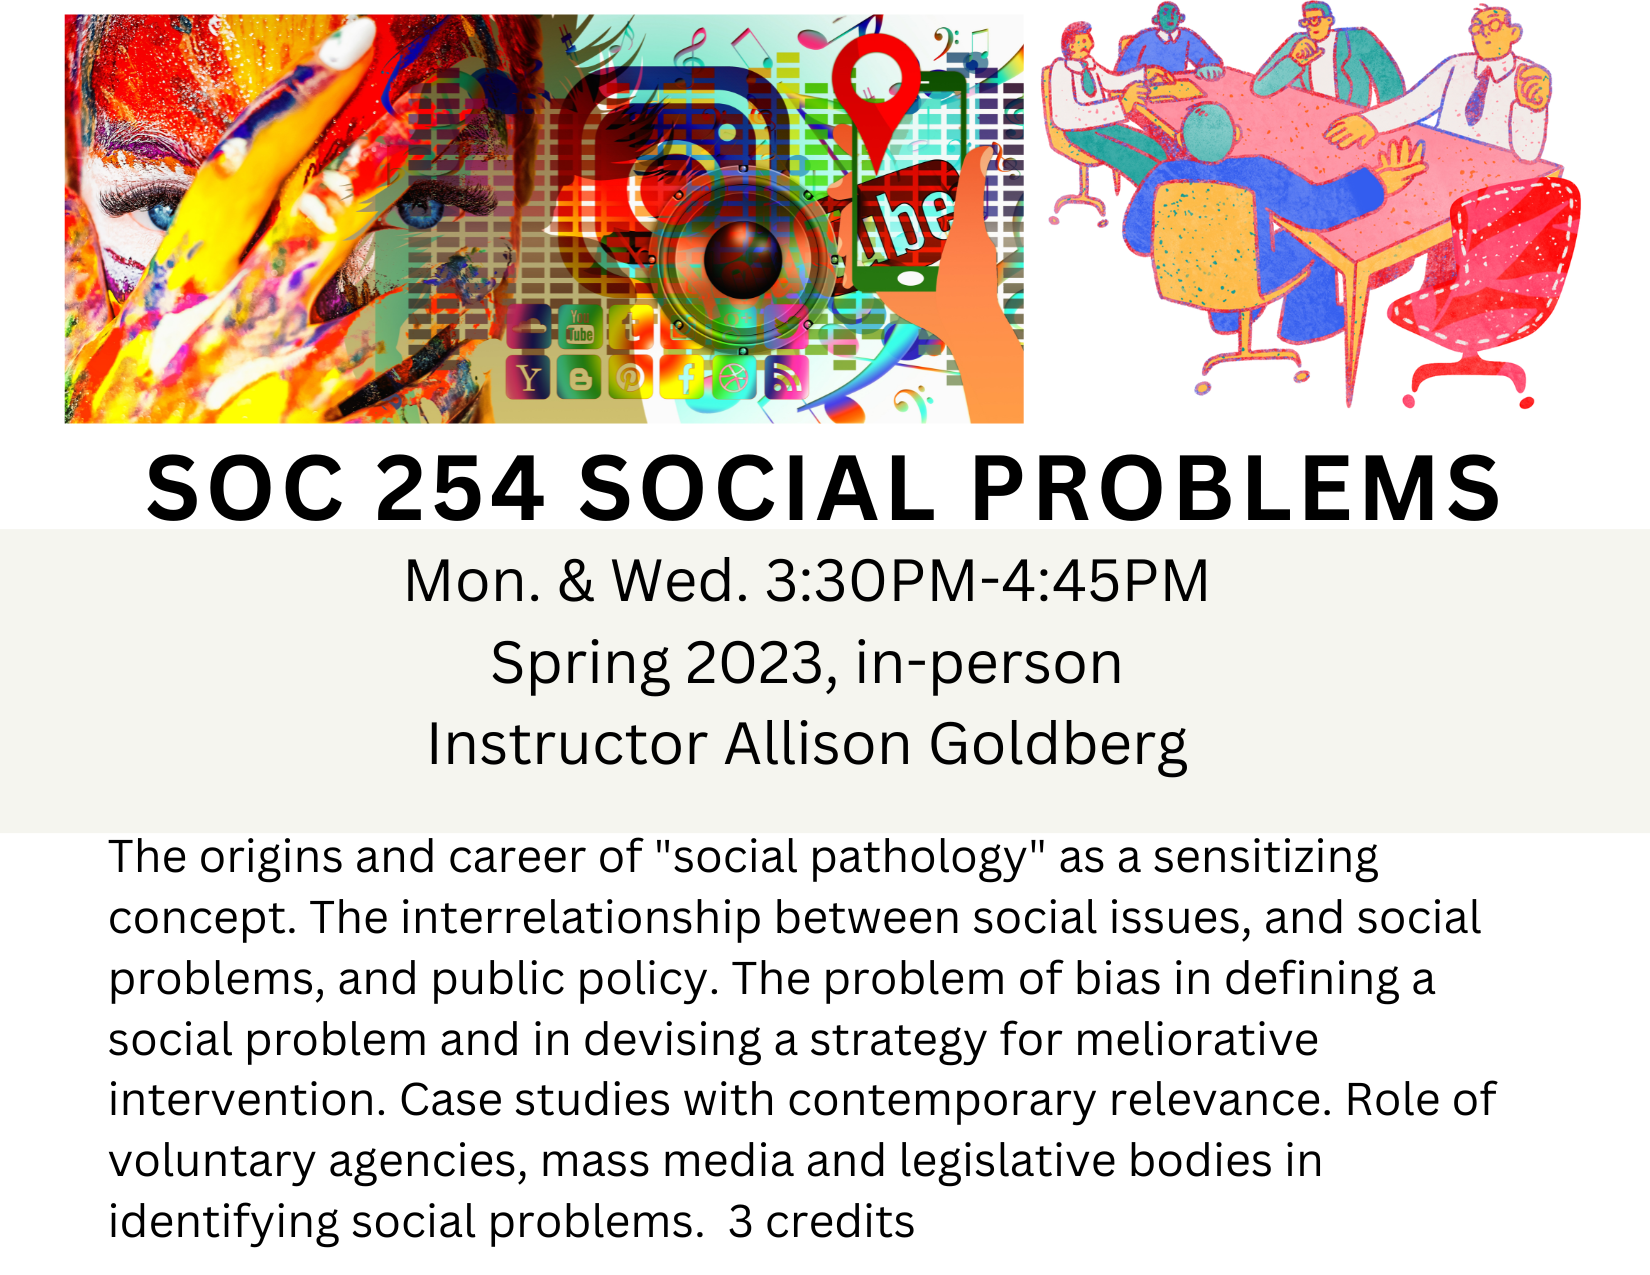 Colin Powell School CCNY Sociology SOC 254 Social Problems Course Spring 2023